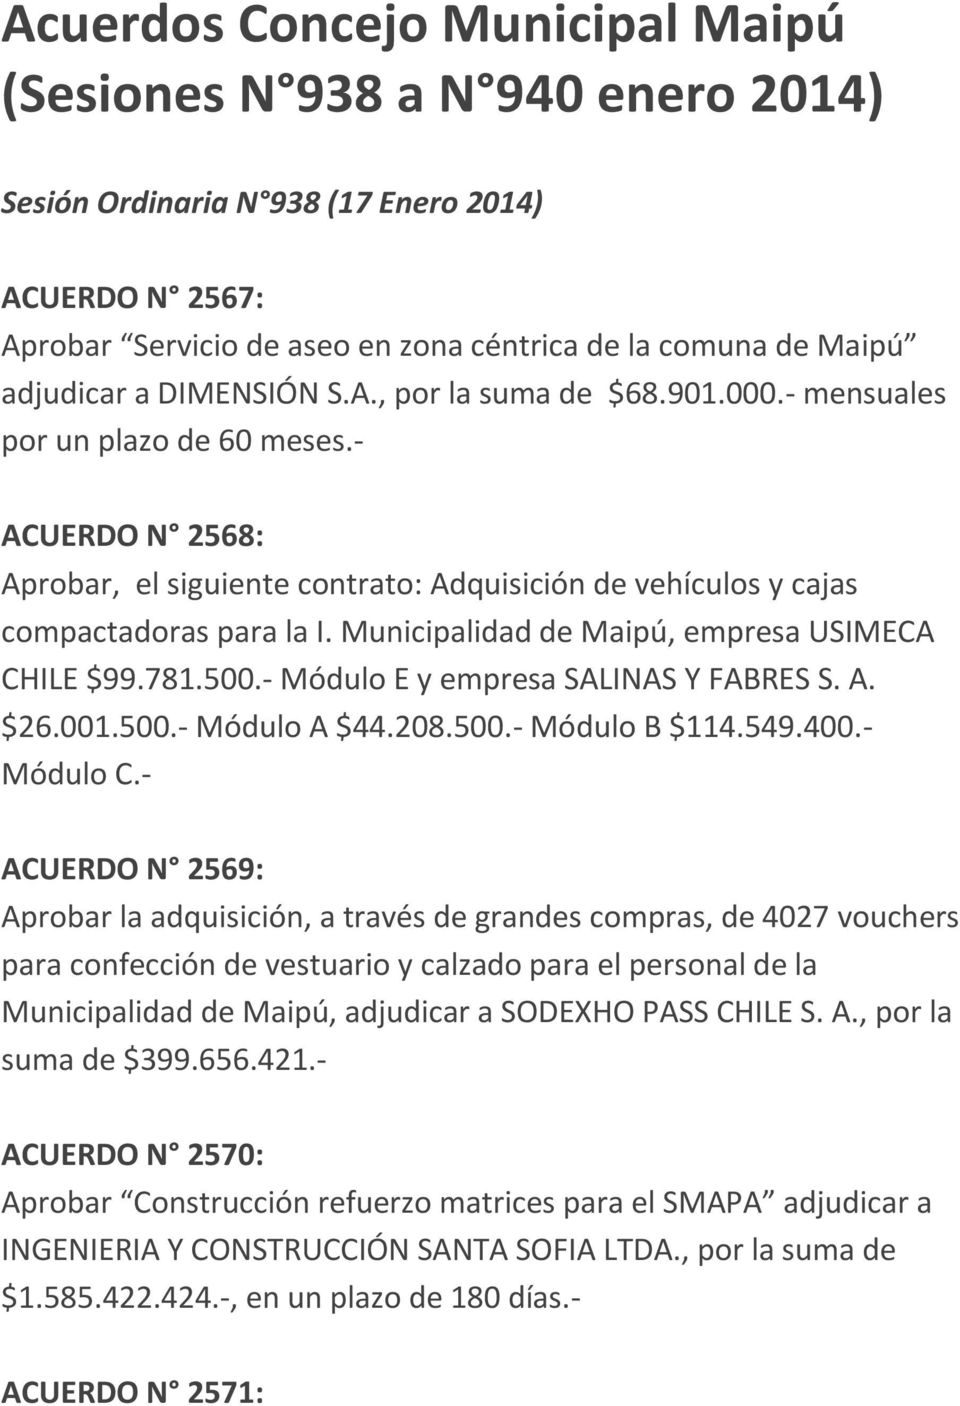 Municipalidad de Maipú, empresa USIMECA CHILE $99.781.500.- Módulo E y empresa SALINAS Y FABRES S. A. $26.001.500.- Módulo A $44.208.500.- Módulo B $114.549.400.- Módulo C.